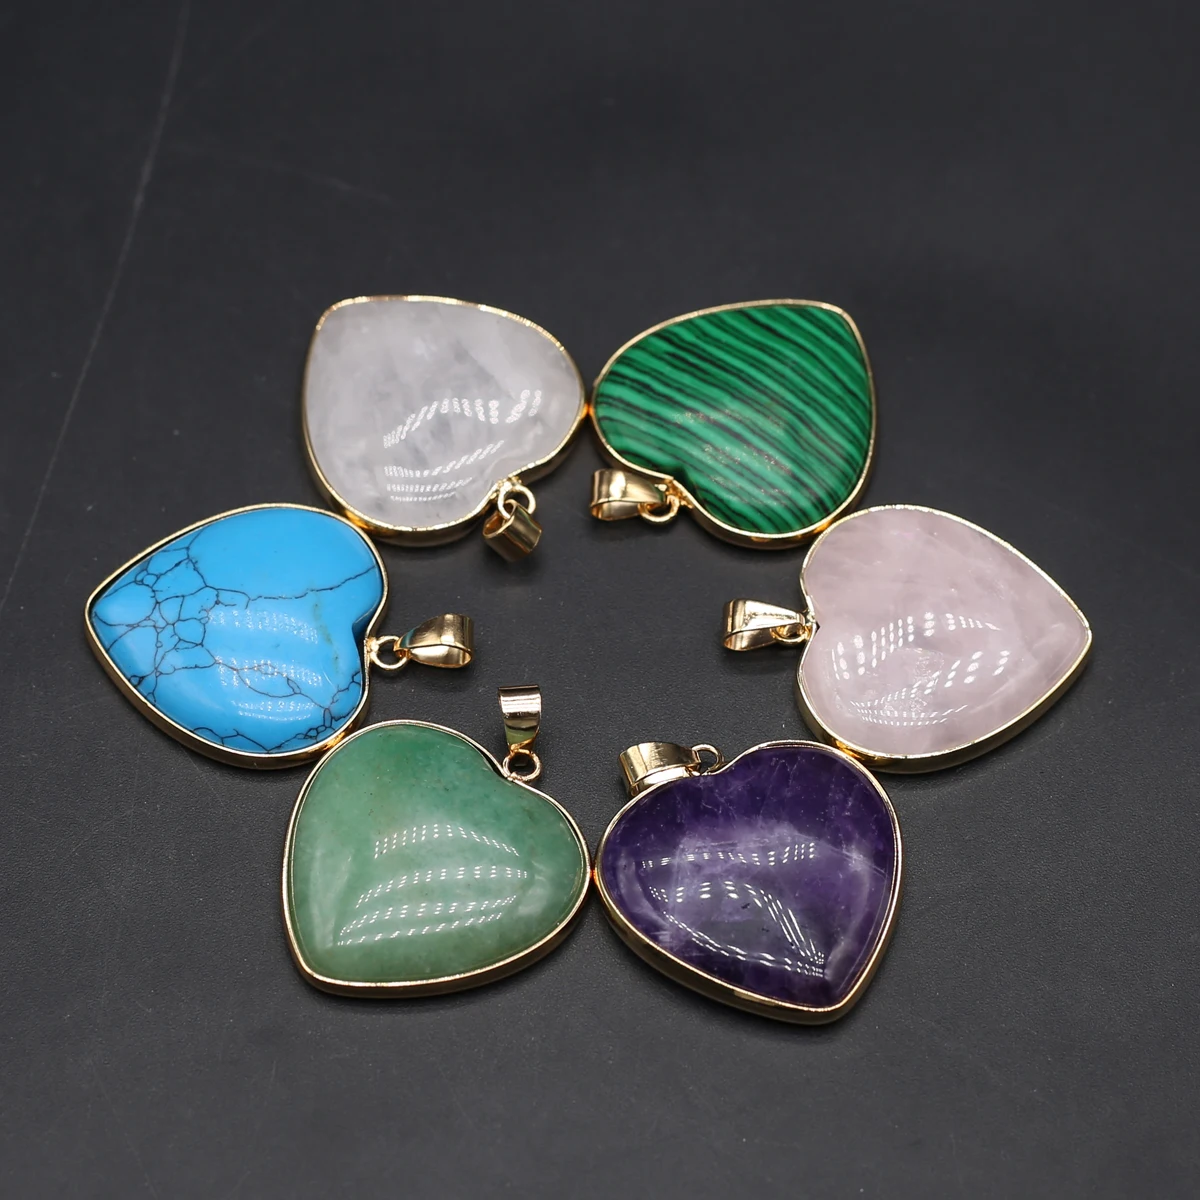 

Natural Stone Pendant Heart Amethyst Rose Quartz Malachite Turquoise Jewelry MakingDIY Necklace Accessory Gift 31x34mm